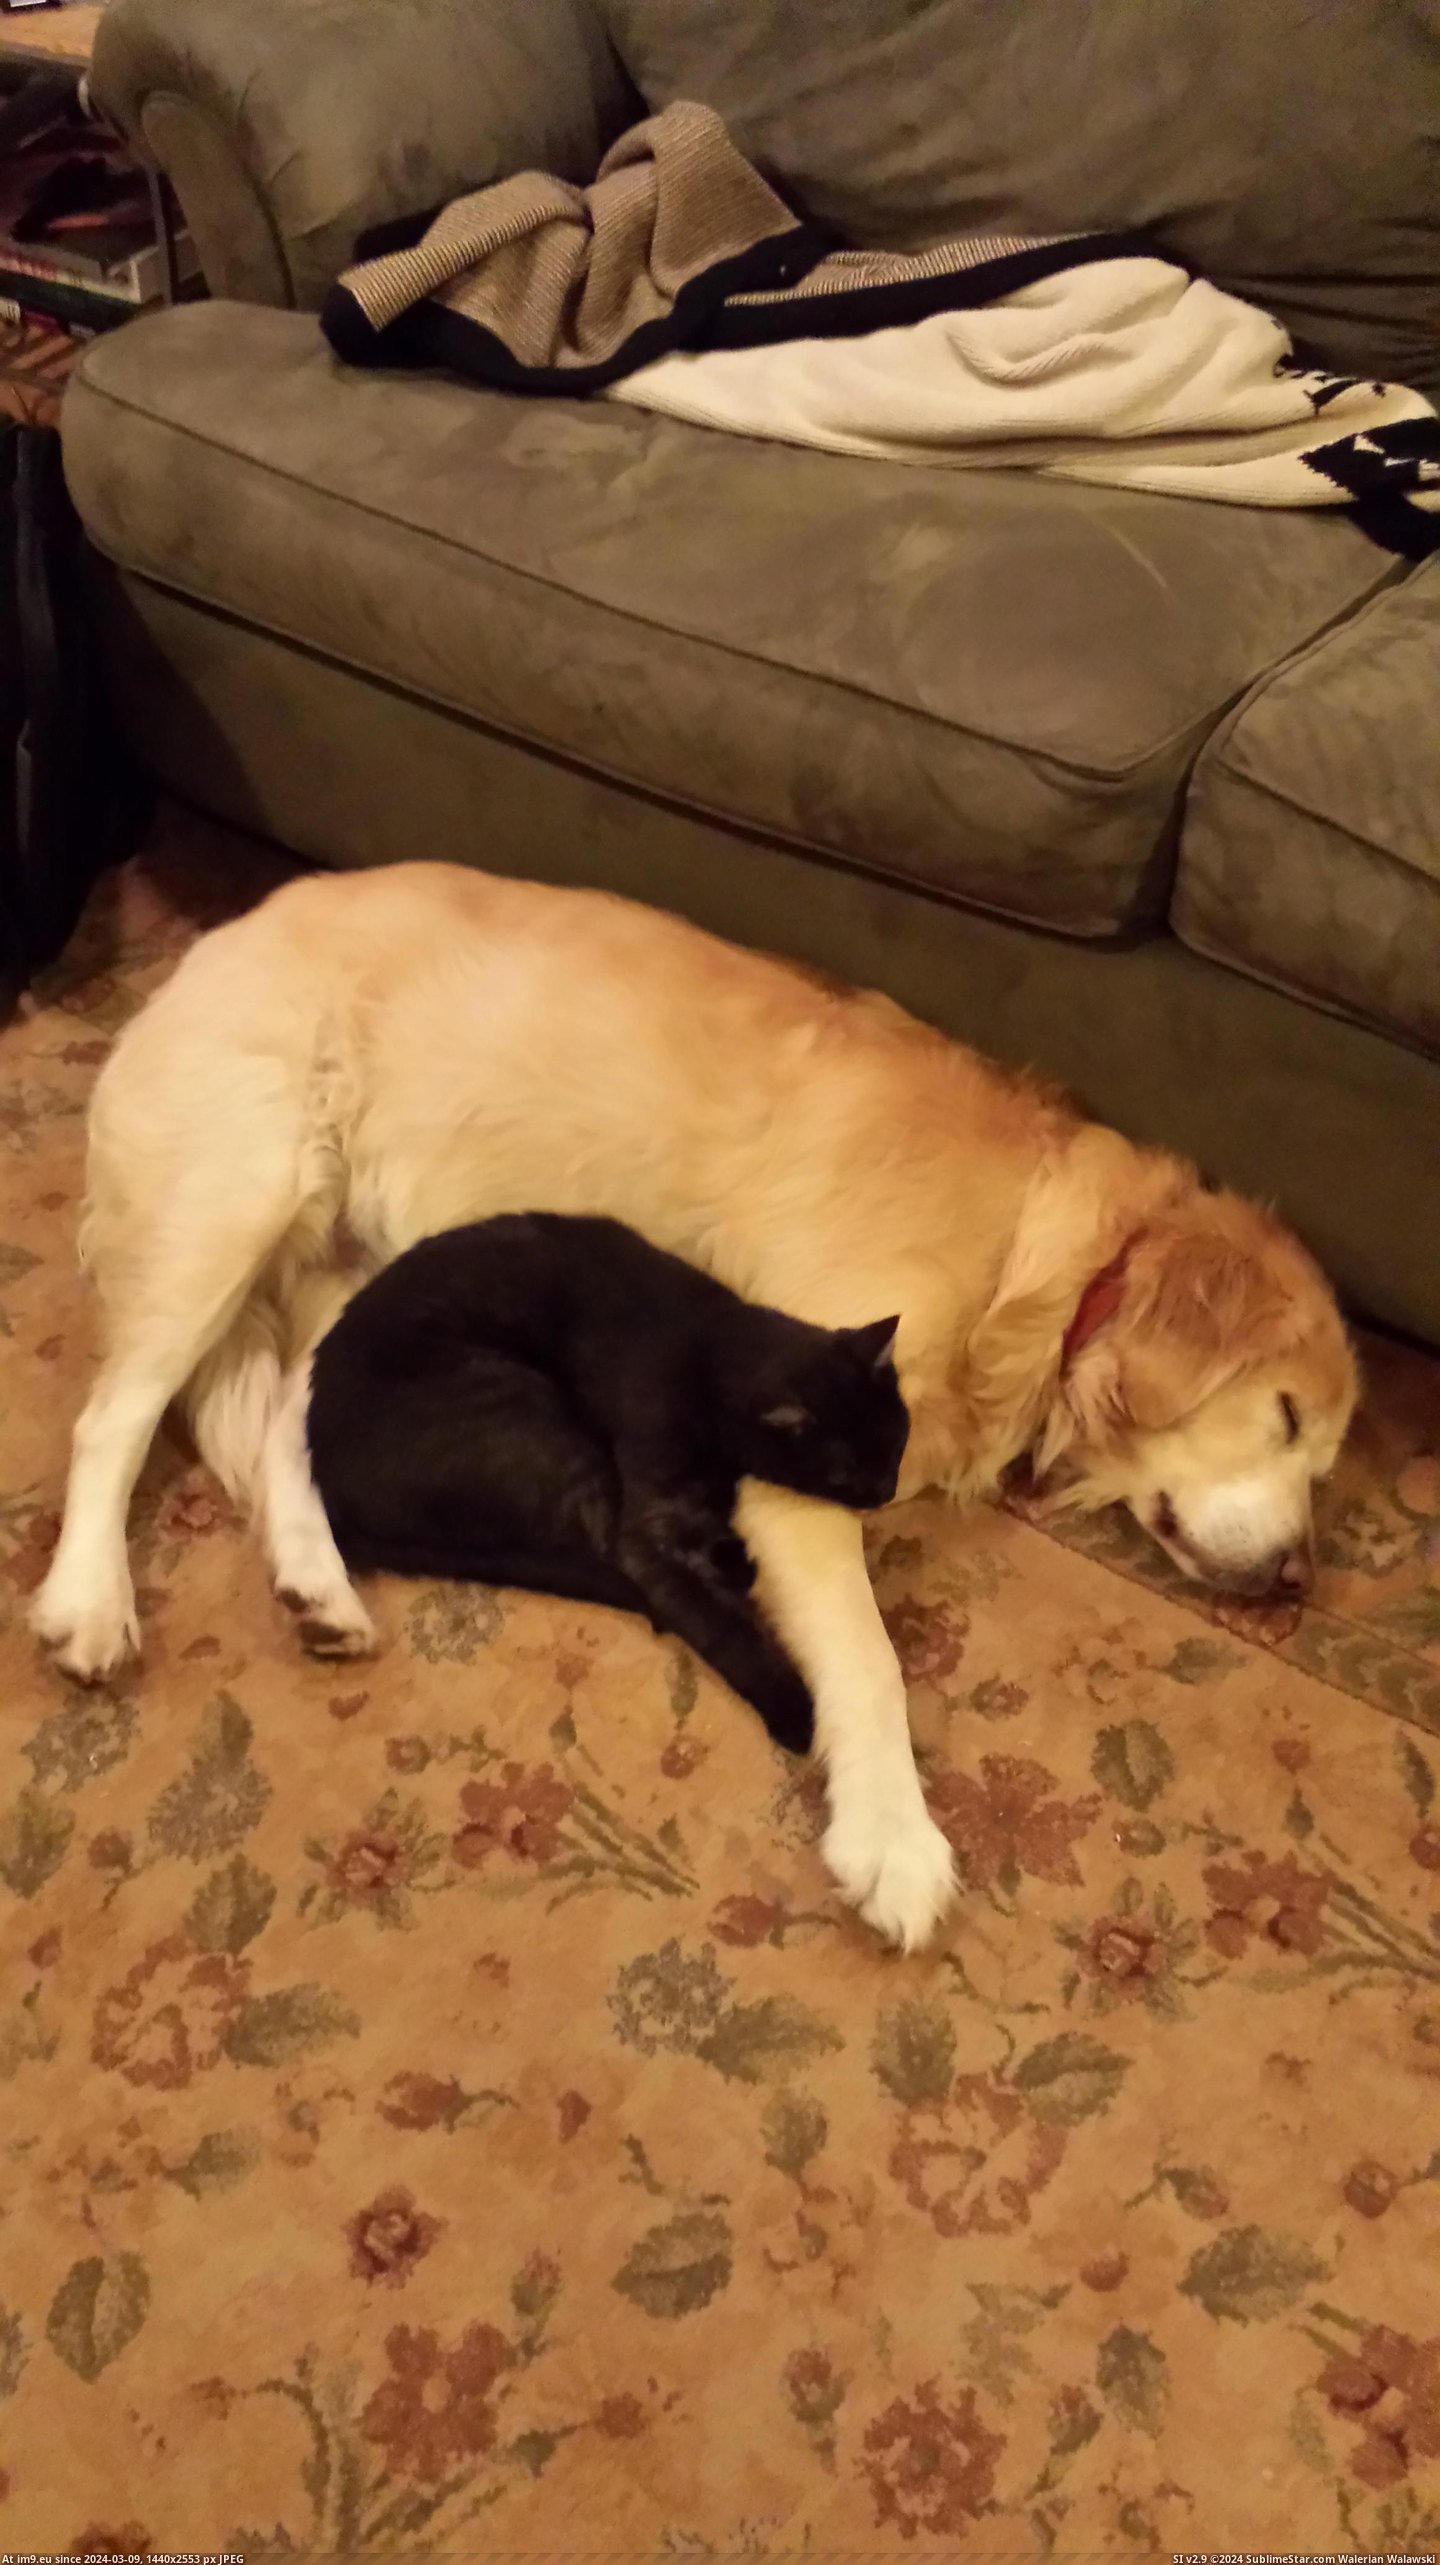 #Cat #Sleep #Dog [Aww] My dog and cat sleep together Pic. (Изображение из альбом My r/AWW favs))